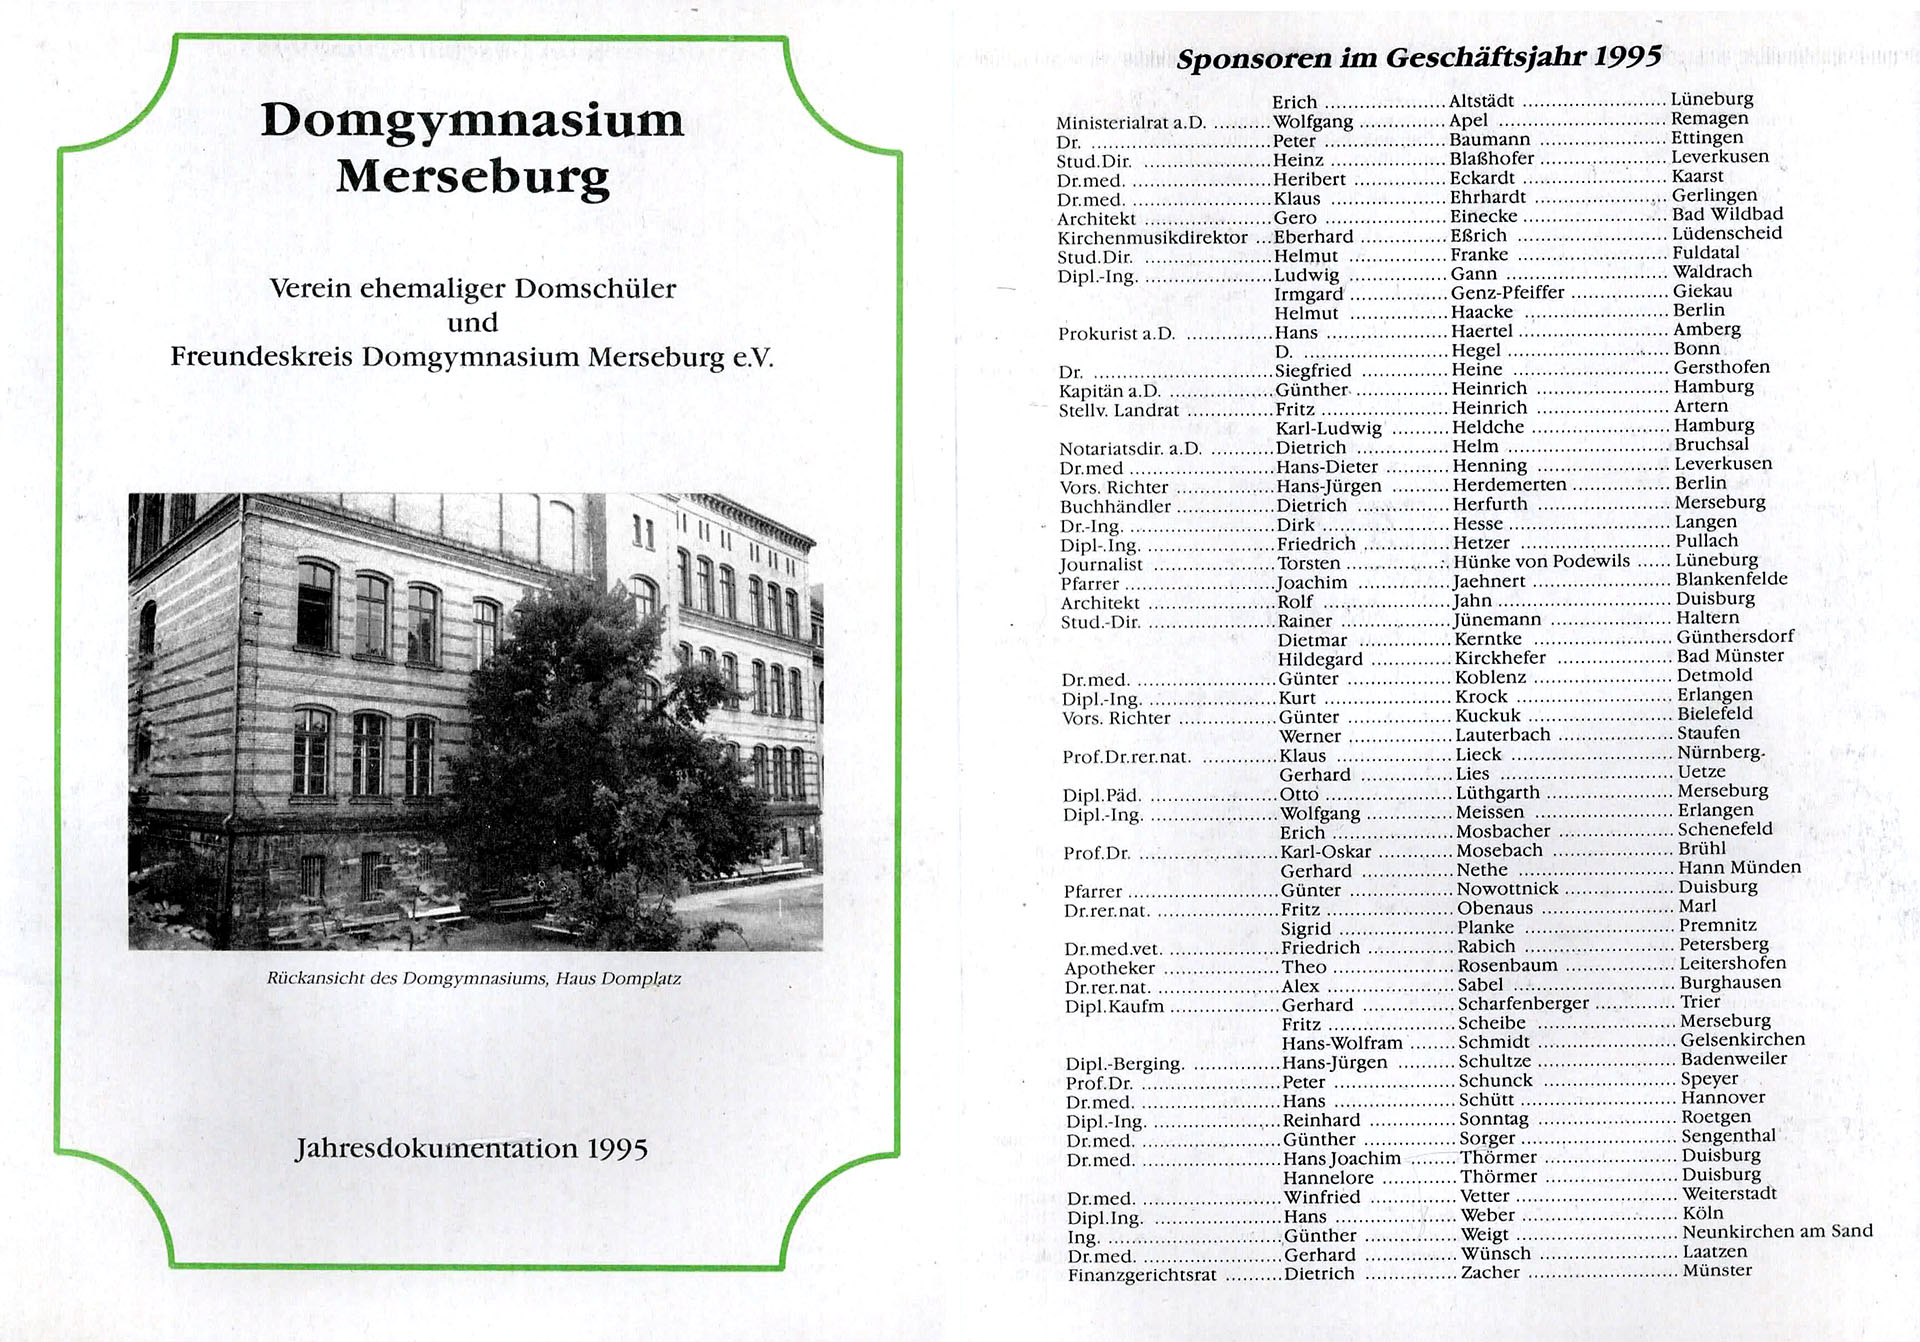 Domgymnasium Merseburg - Jahresdokumentation 1995